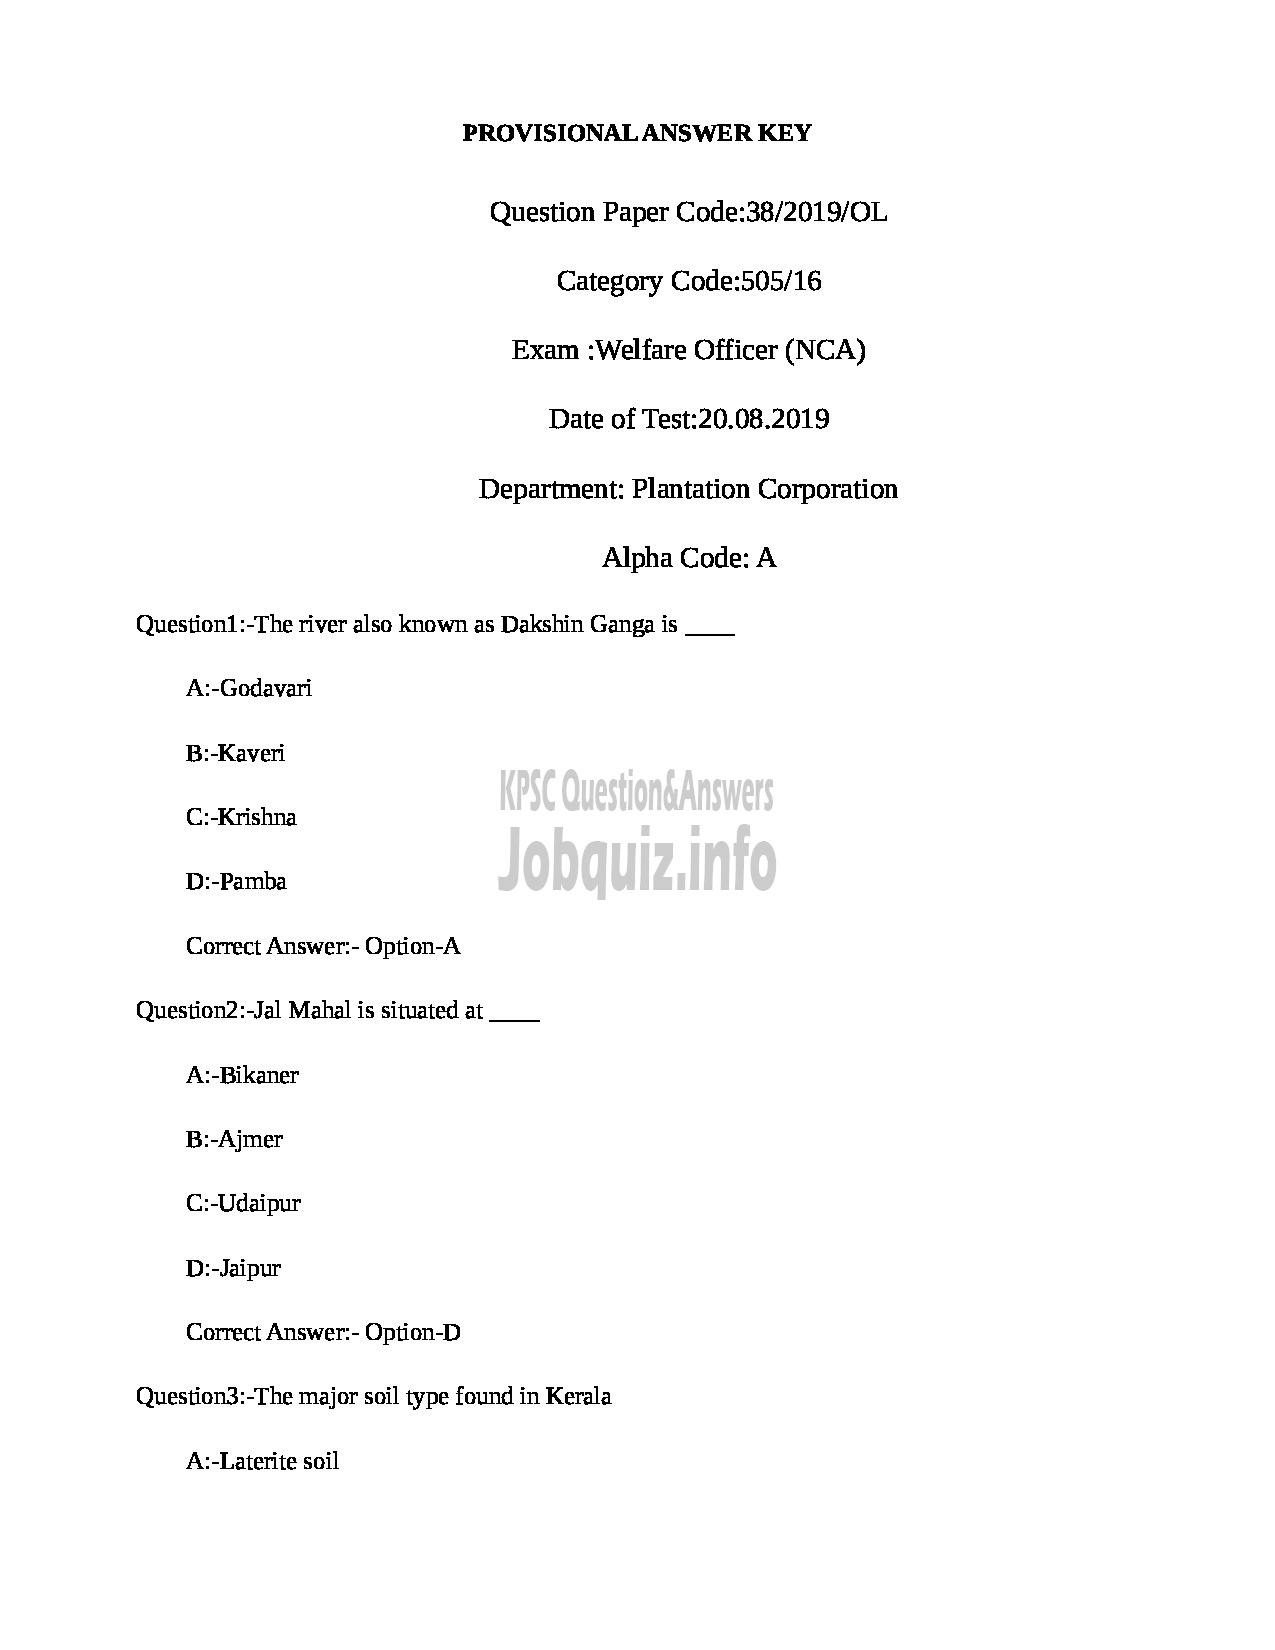 Kerala PSC Question Paper - Welfare Officer (NCA) Plantation Corporation-1